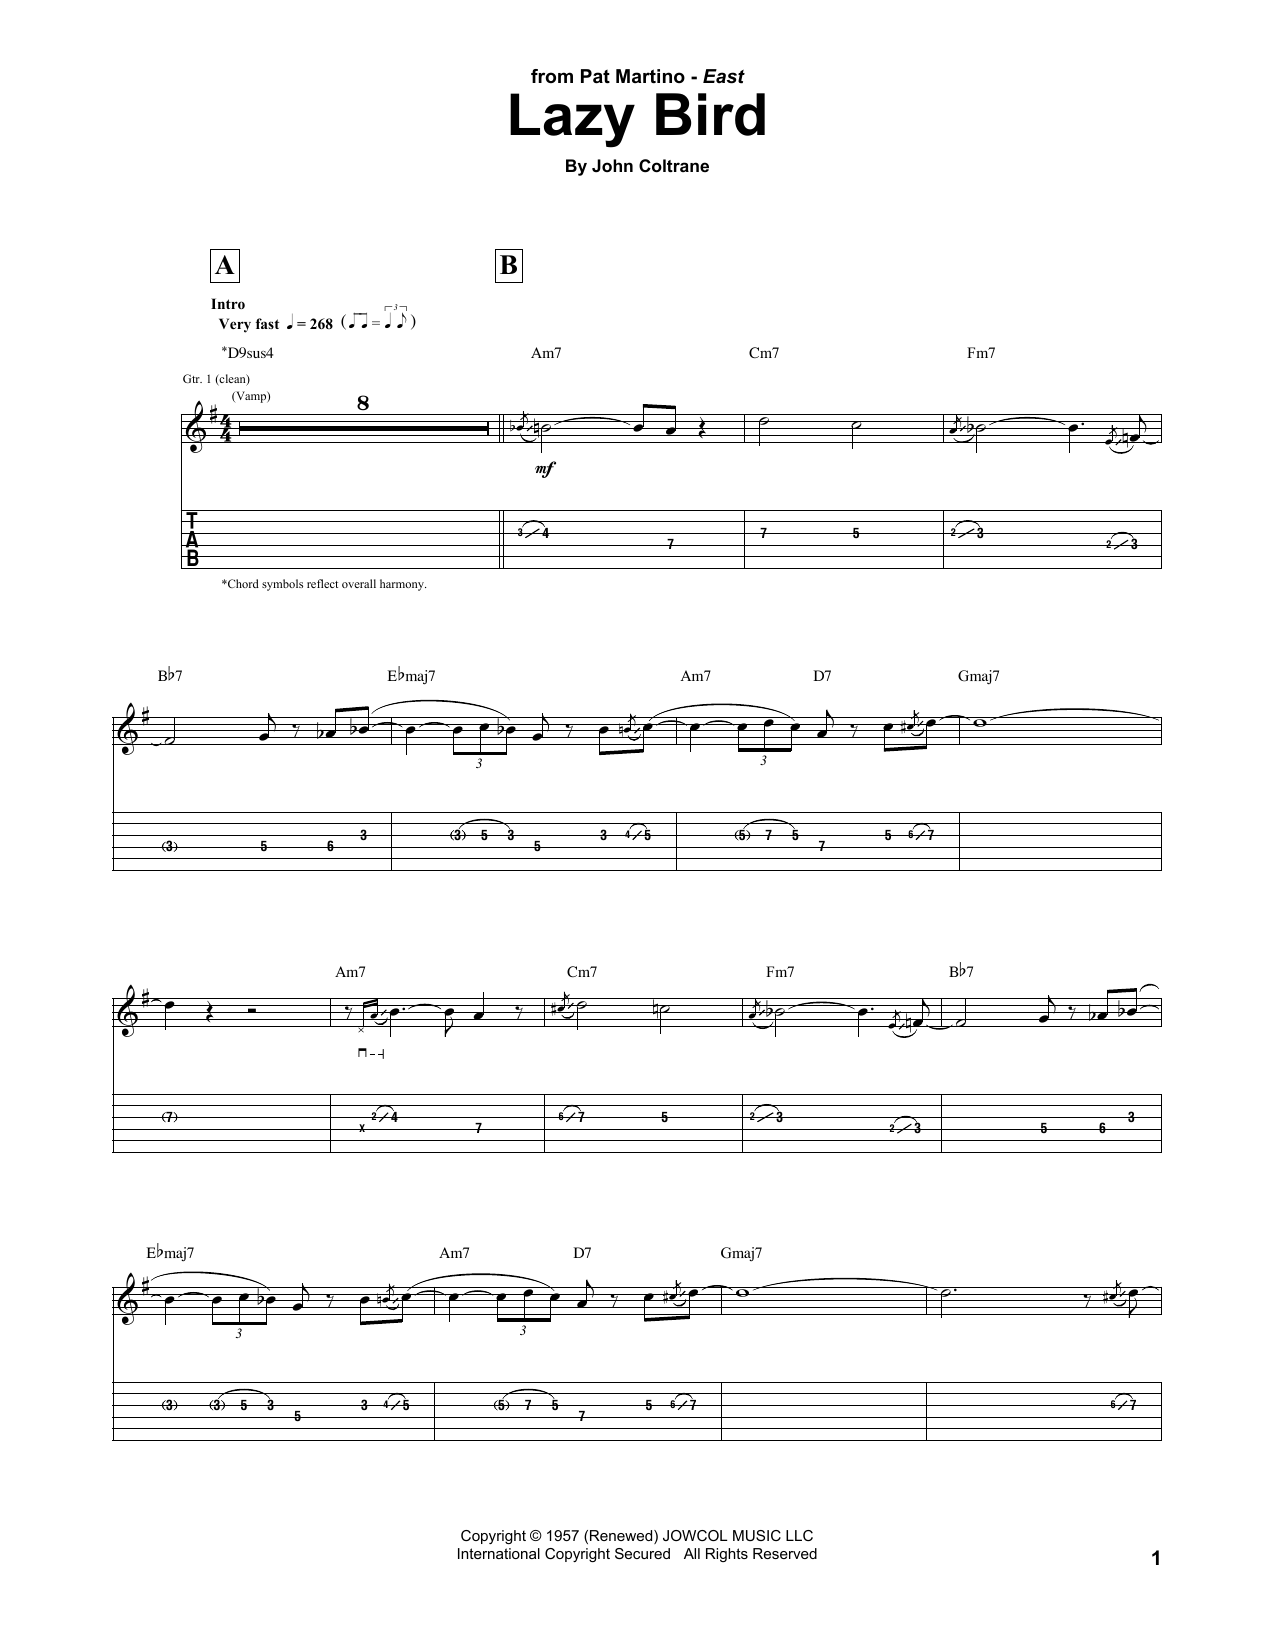 Pat Martino Lazy Bird Sheet Music Notes & Chords for Guitar Tab - Download or Print PDF